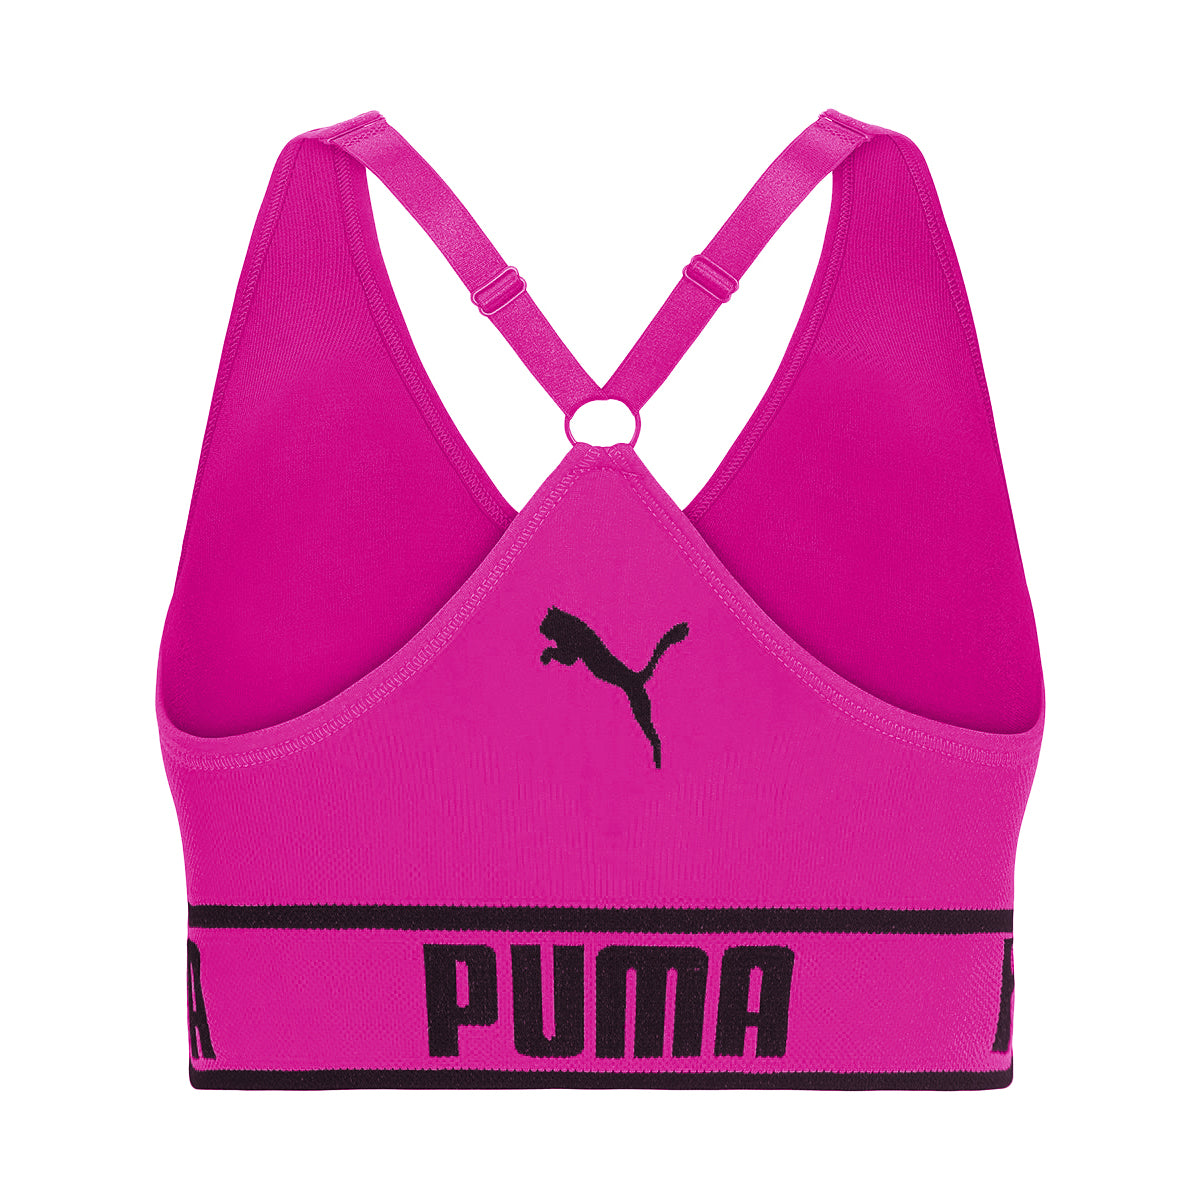 Puma Criss Cross Adjustable Strap Athletic Exercise Sports Bra Gray Black  Size L